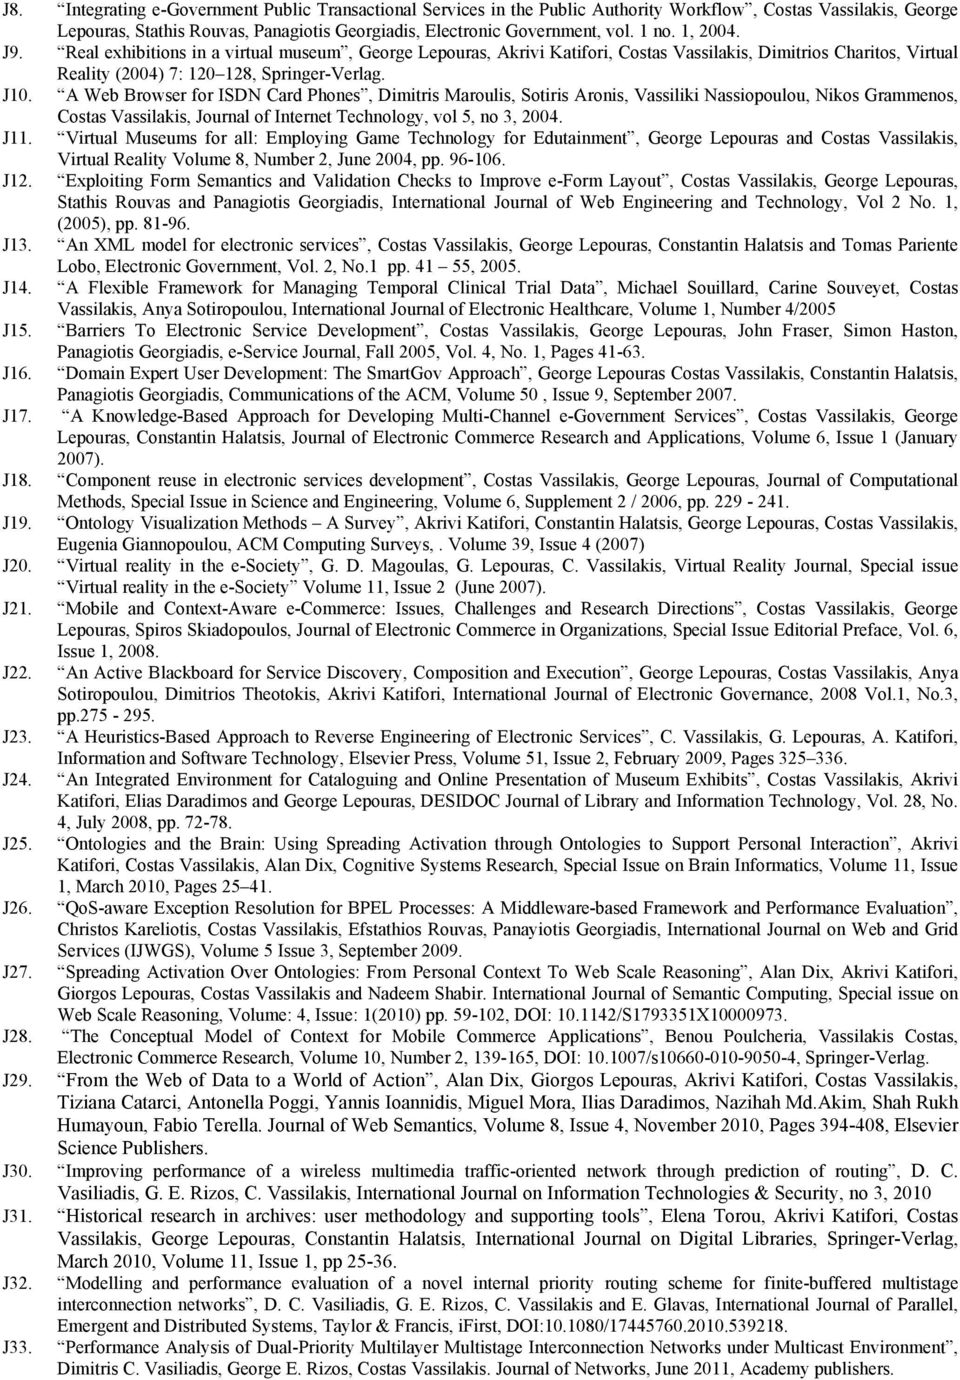 A Web Browser for ISDN Card Phones, Dimitris Maroulis, Sotiris Aronis, Vassiliki Nassiopoulou, Nikos Grammenos, Costas Vassilakis, Journal of Internet Technology, vol 5, no 3, 2004. J11.